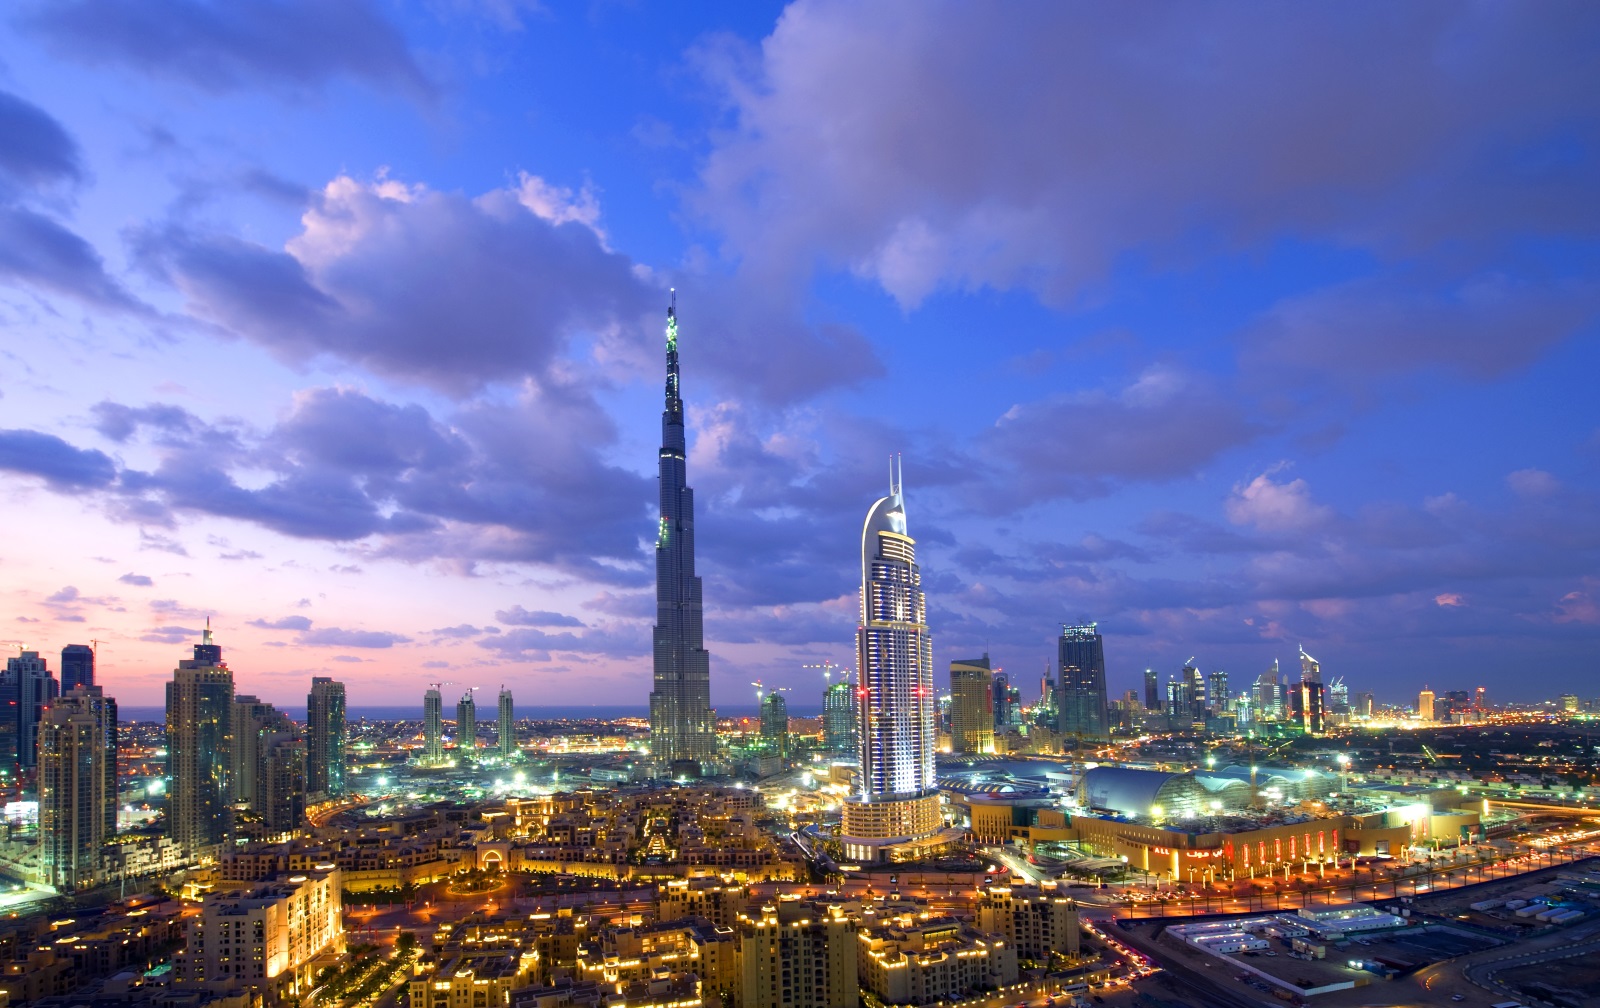 Dubai caters minimum wage earners to buy comfortable apartments in Dubai.